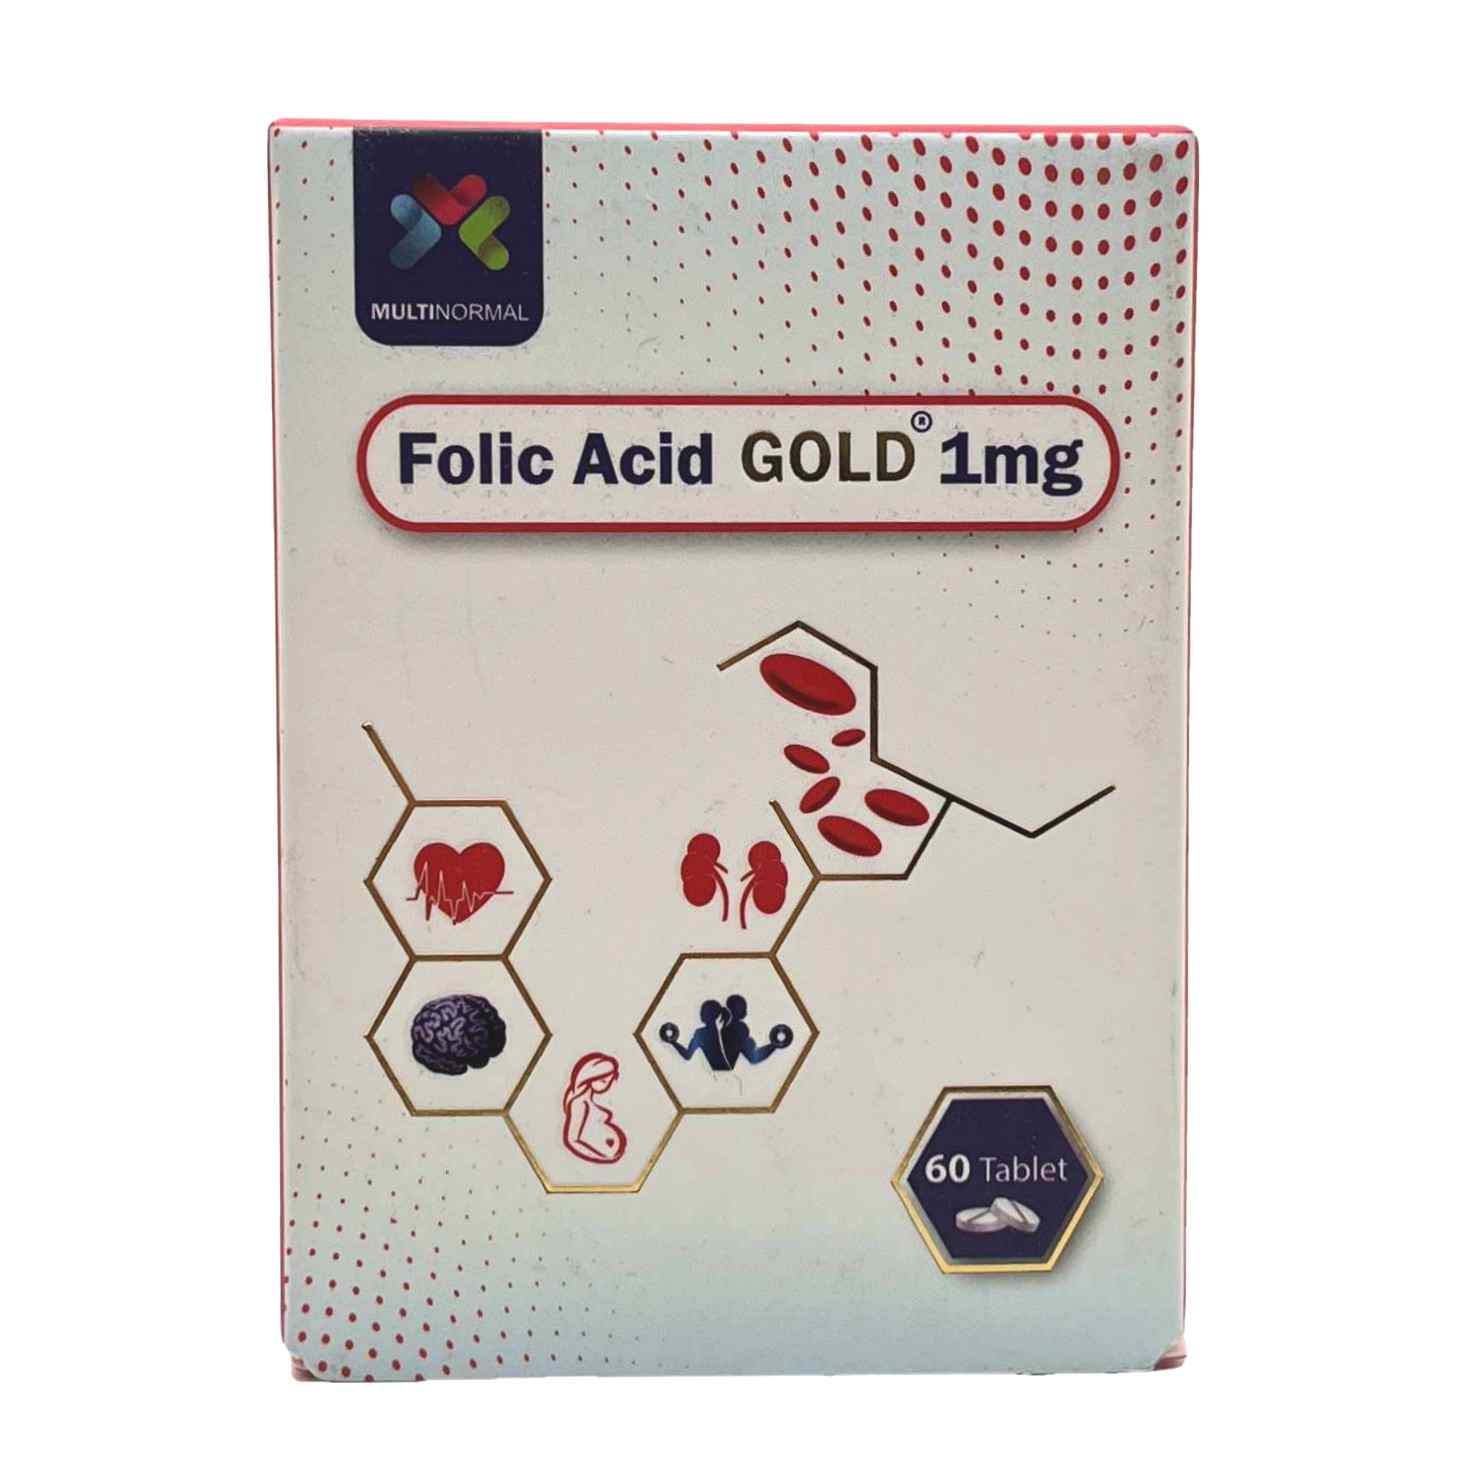 قرص فولیک اسید گلد 1 مولتی نرمال MultiNormal Folic Acid Gold